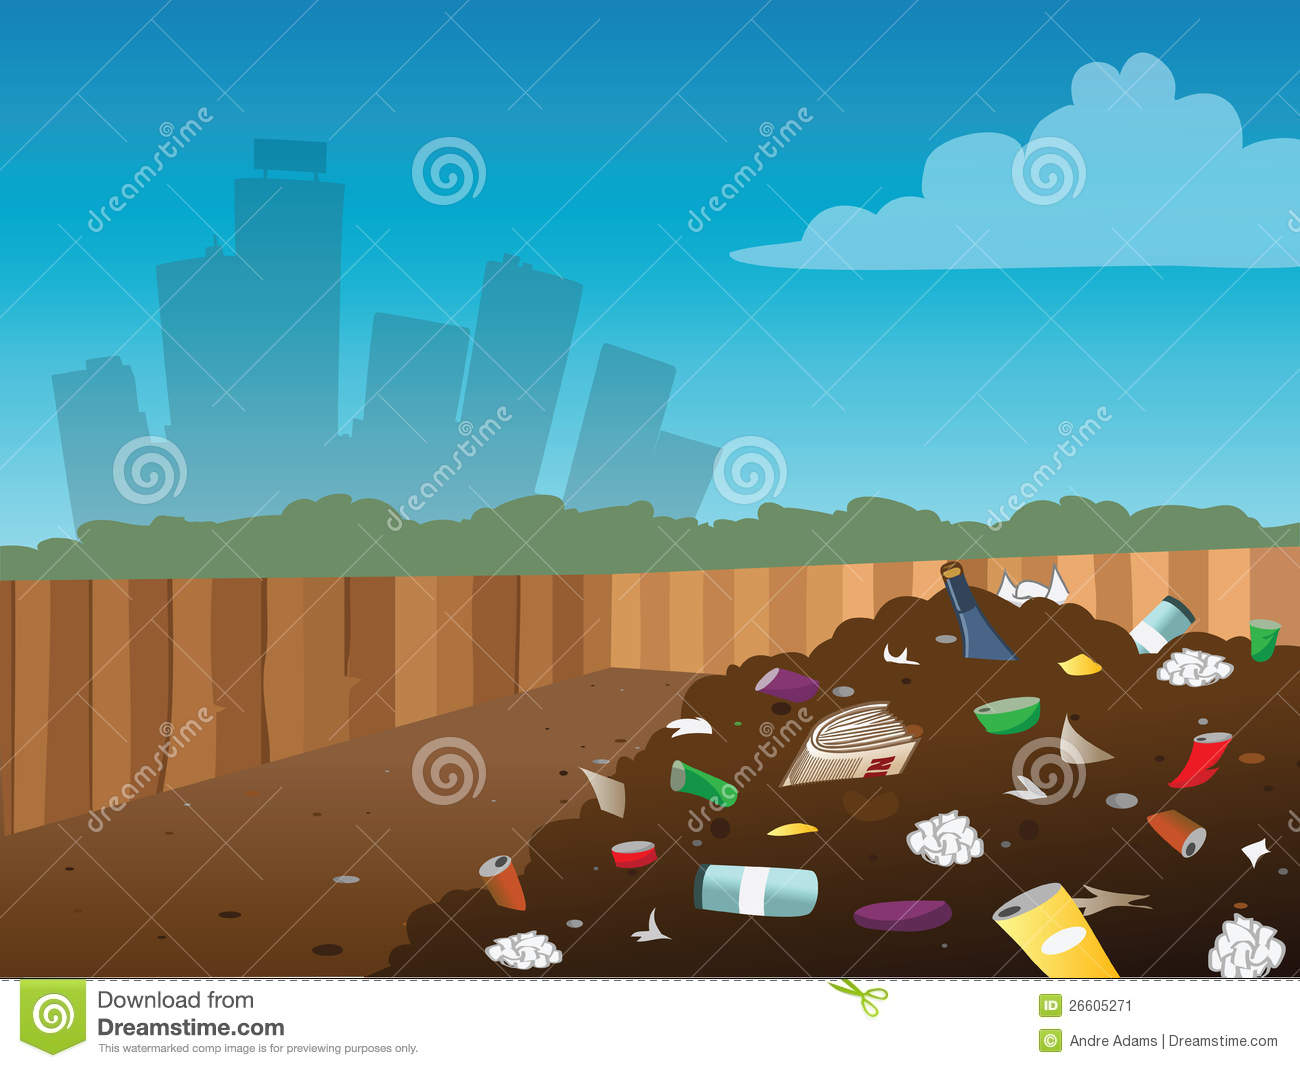 Cartoon Illustration Of A Dump And Landfill